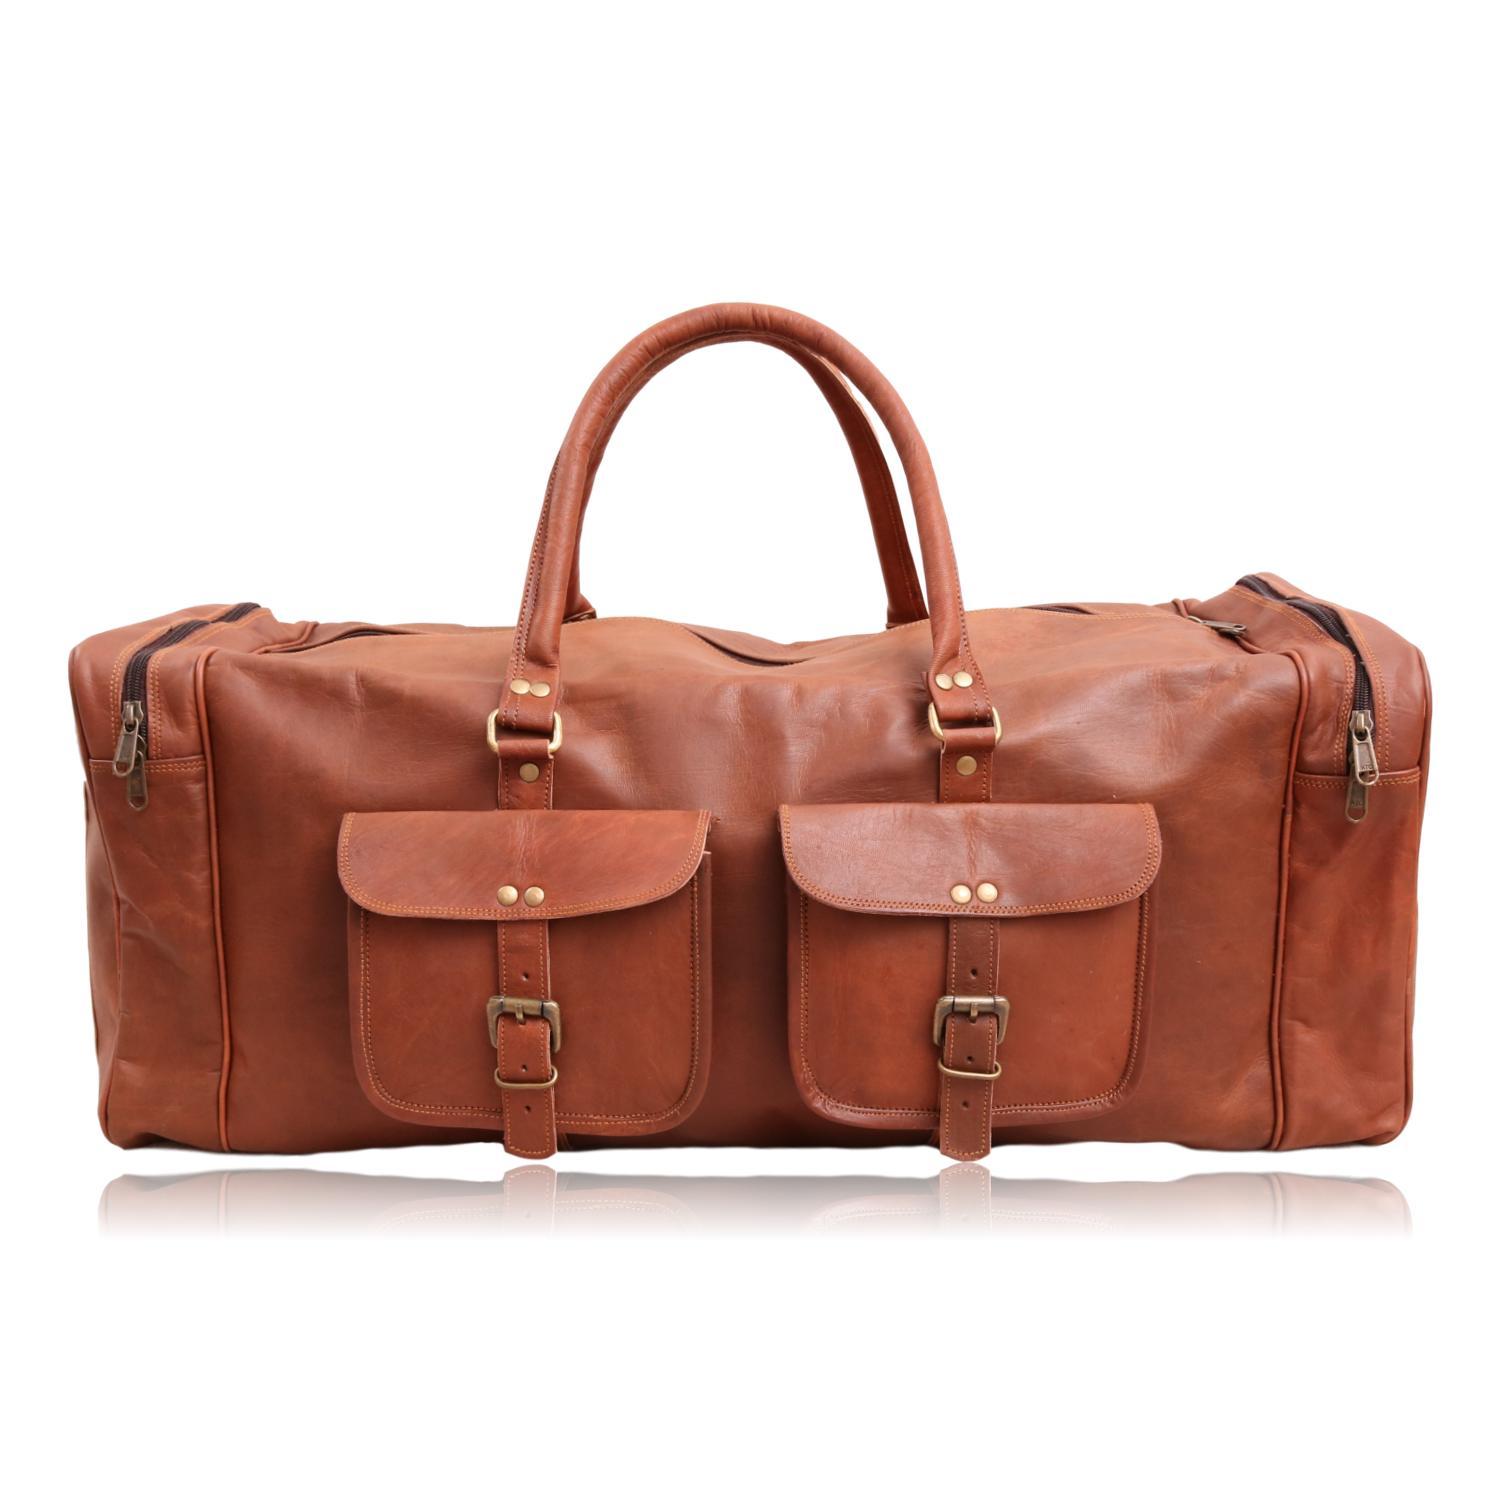 Best Leather Duffel Bag Large Size | Quvom.com